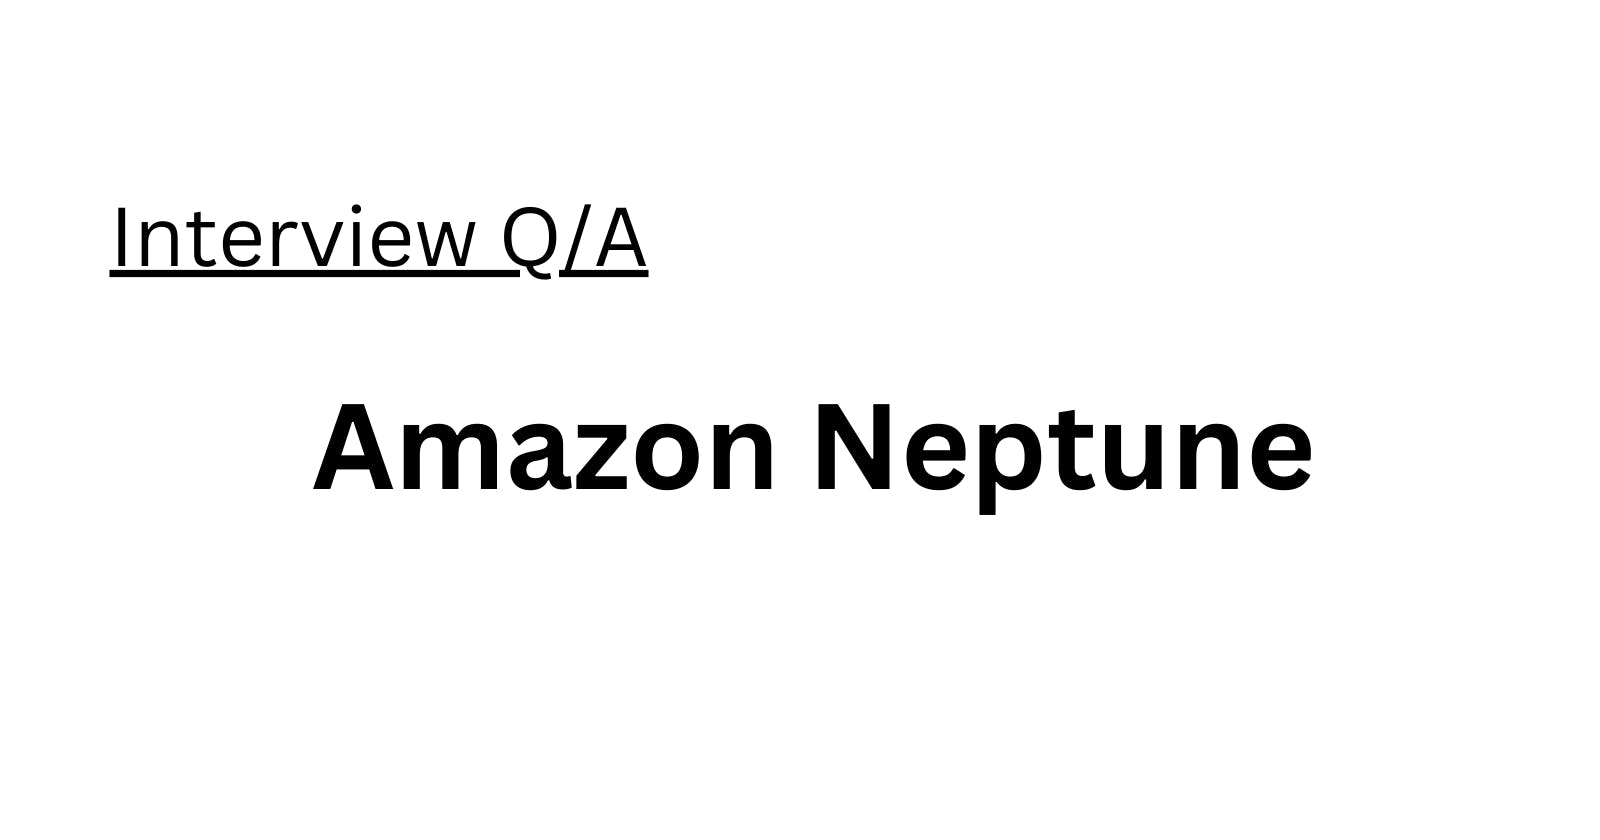 Amazon Neptune Interview Q/A